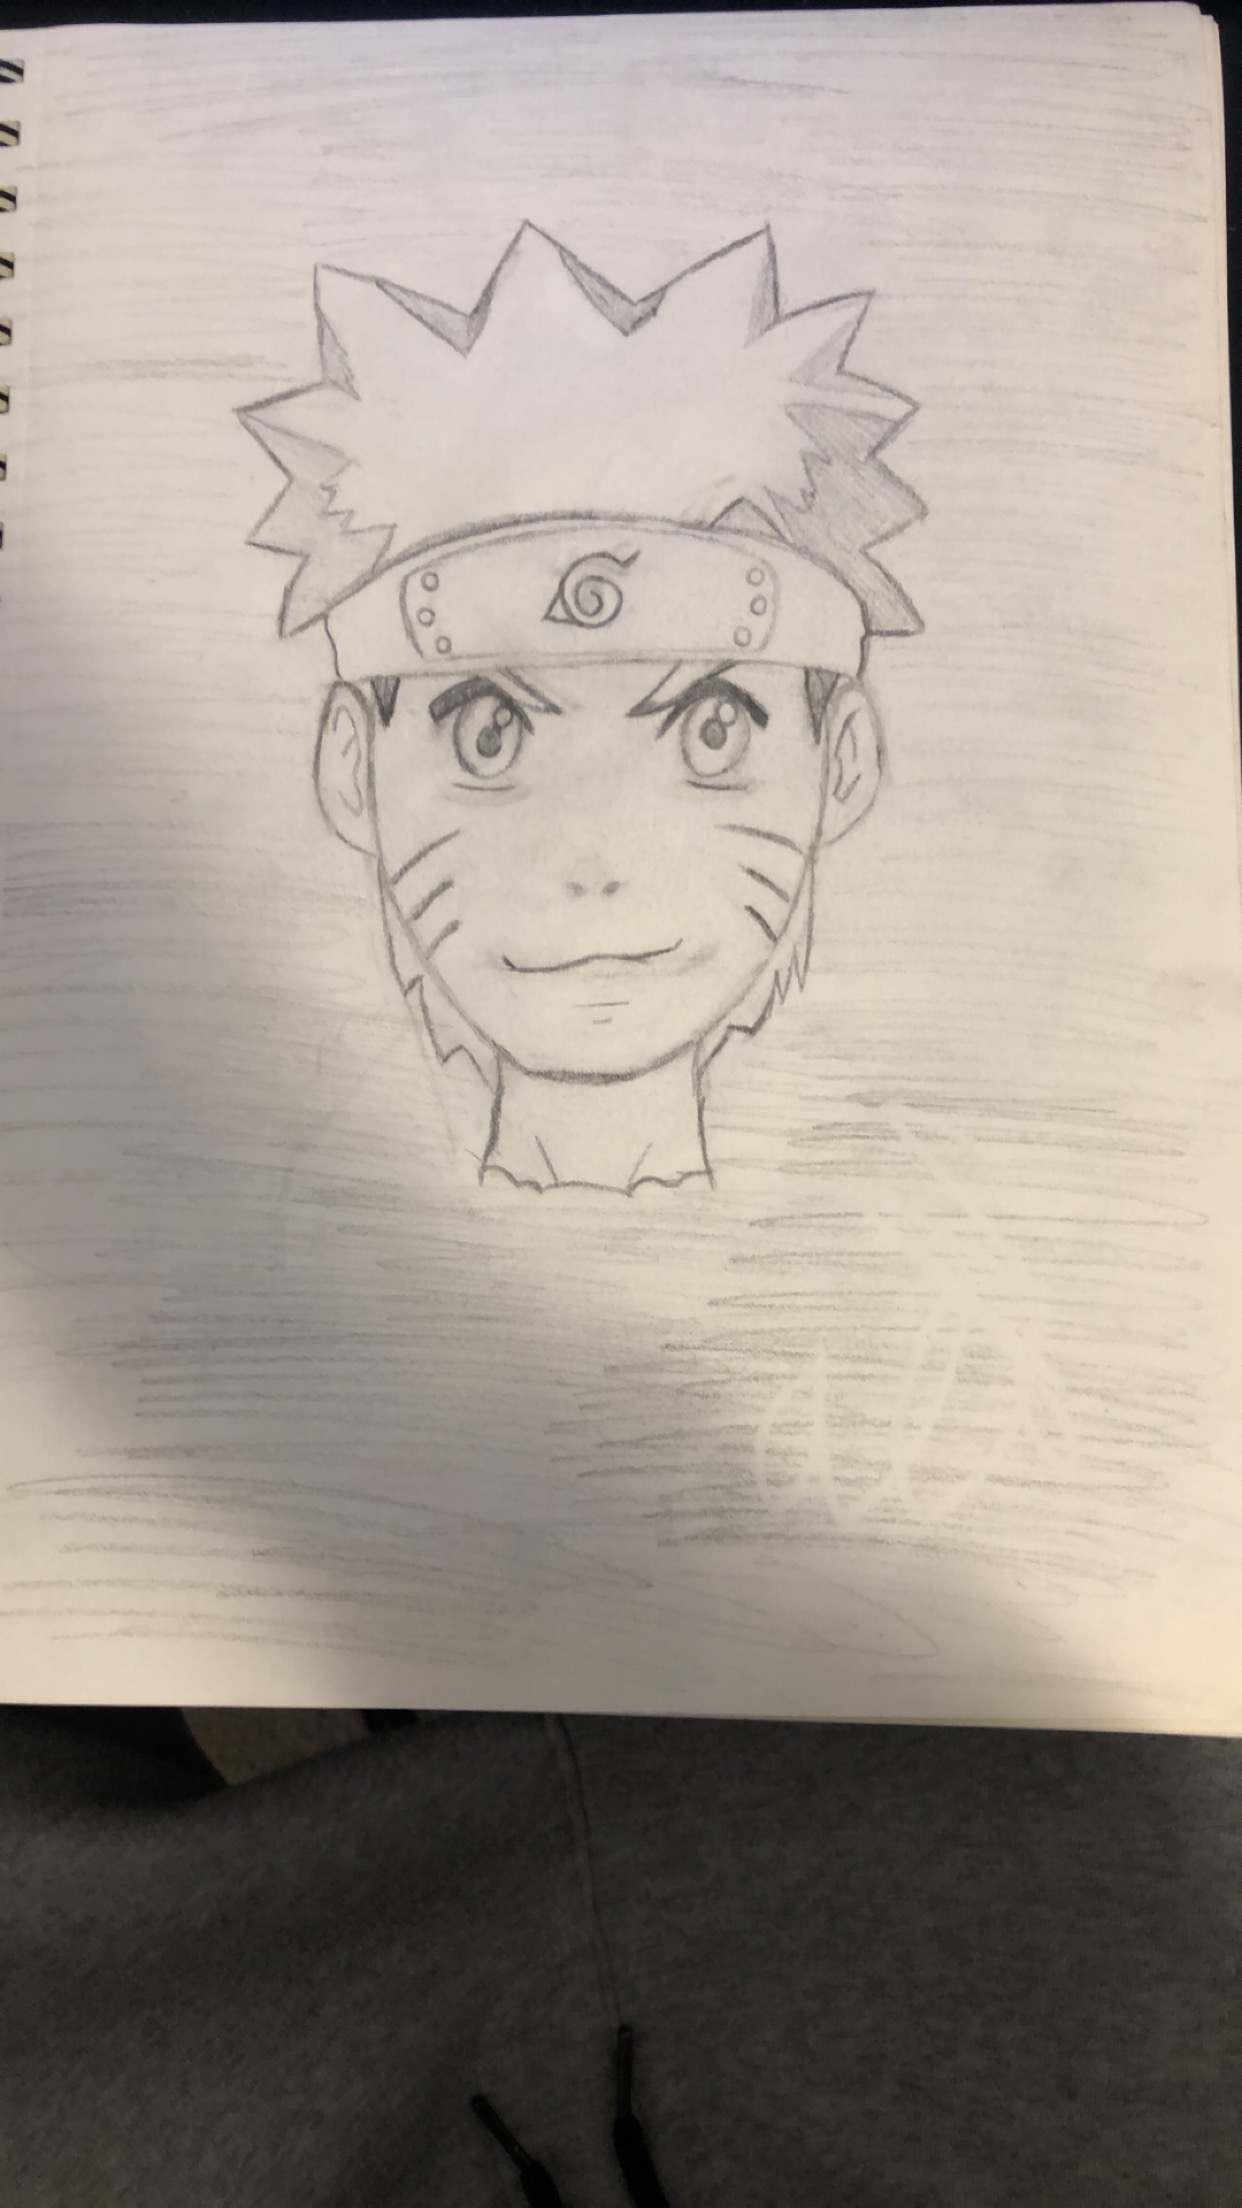 22 Awesome Naruto Drawings for Anime Artists - Beautiful Dawn Designs | Naruto  sketch drawing, Naruto drawings, Drawings